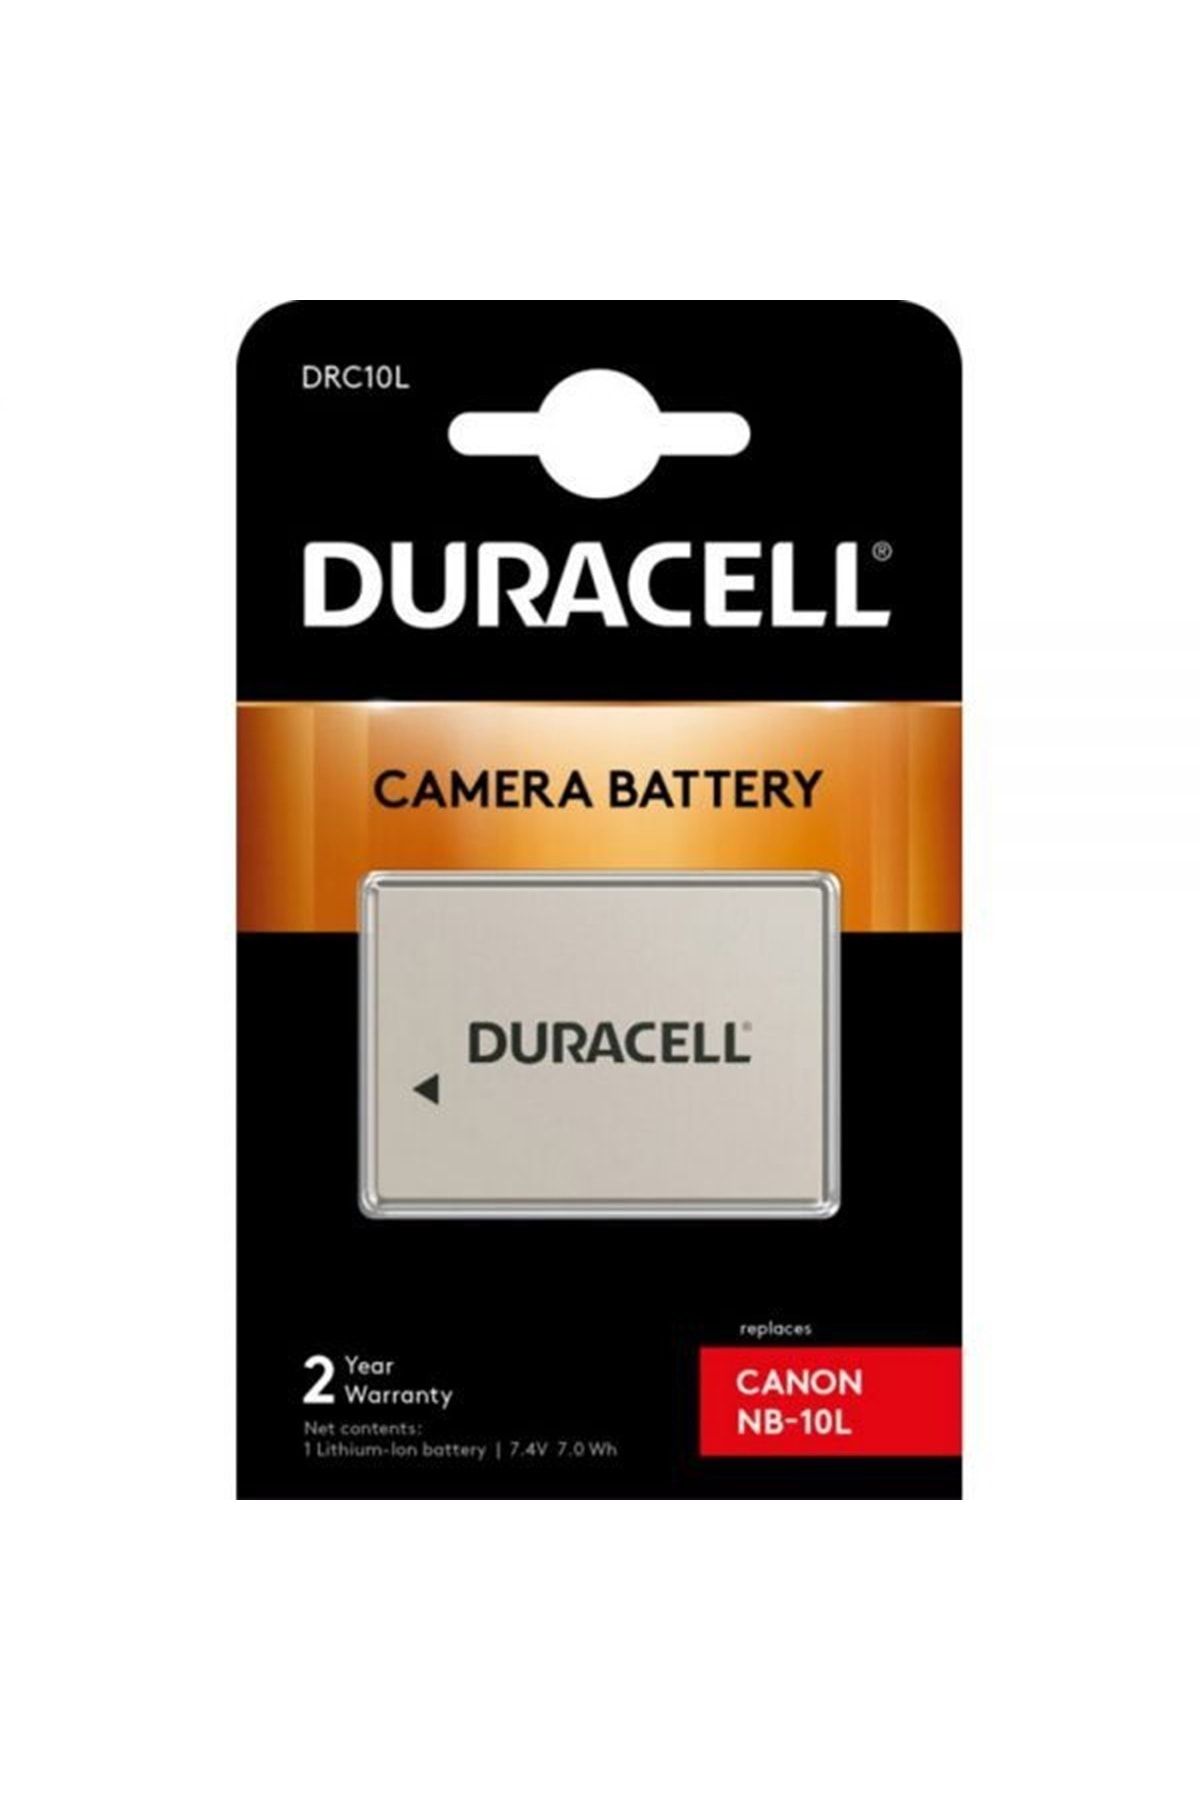 Duracell Drc10l Canon Nb 10 Batarya